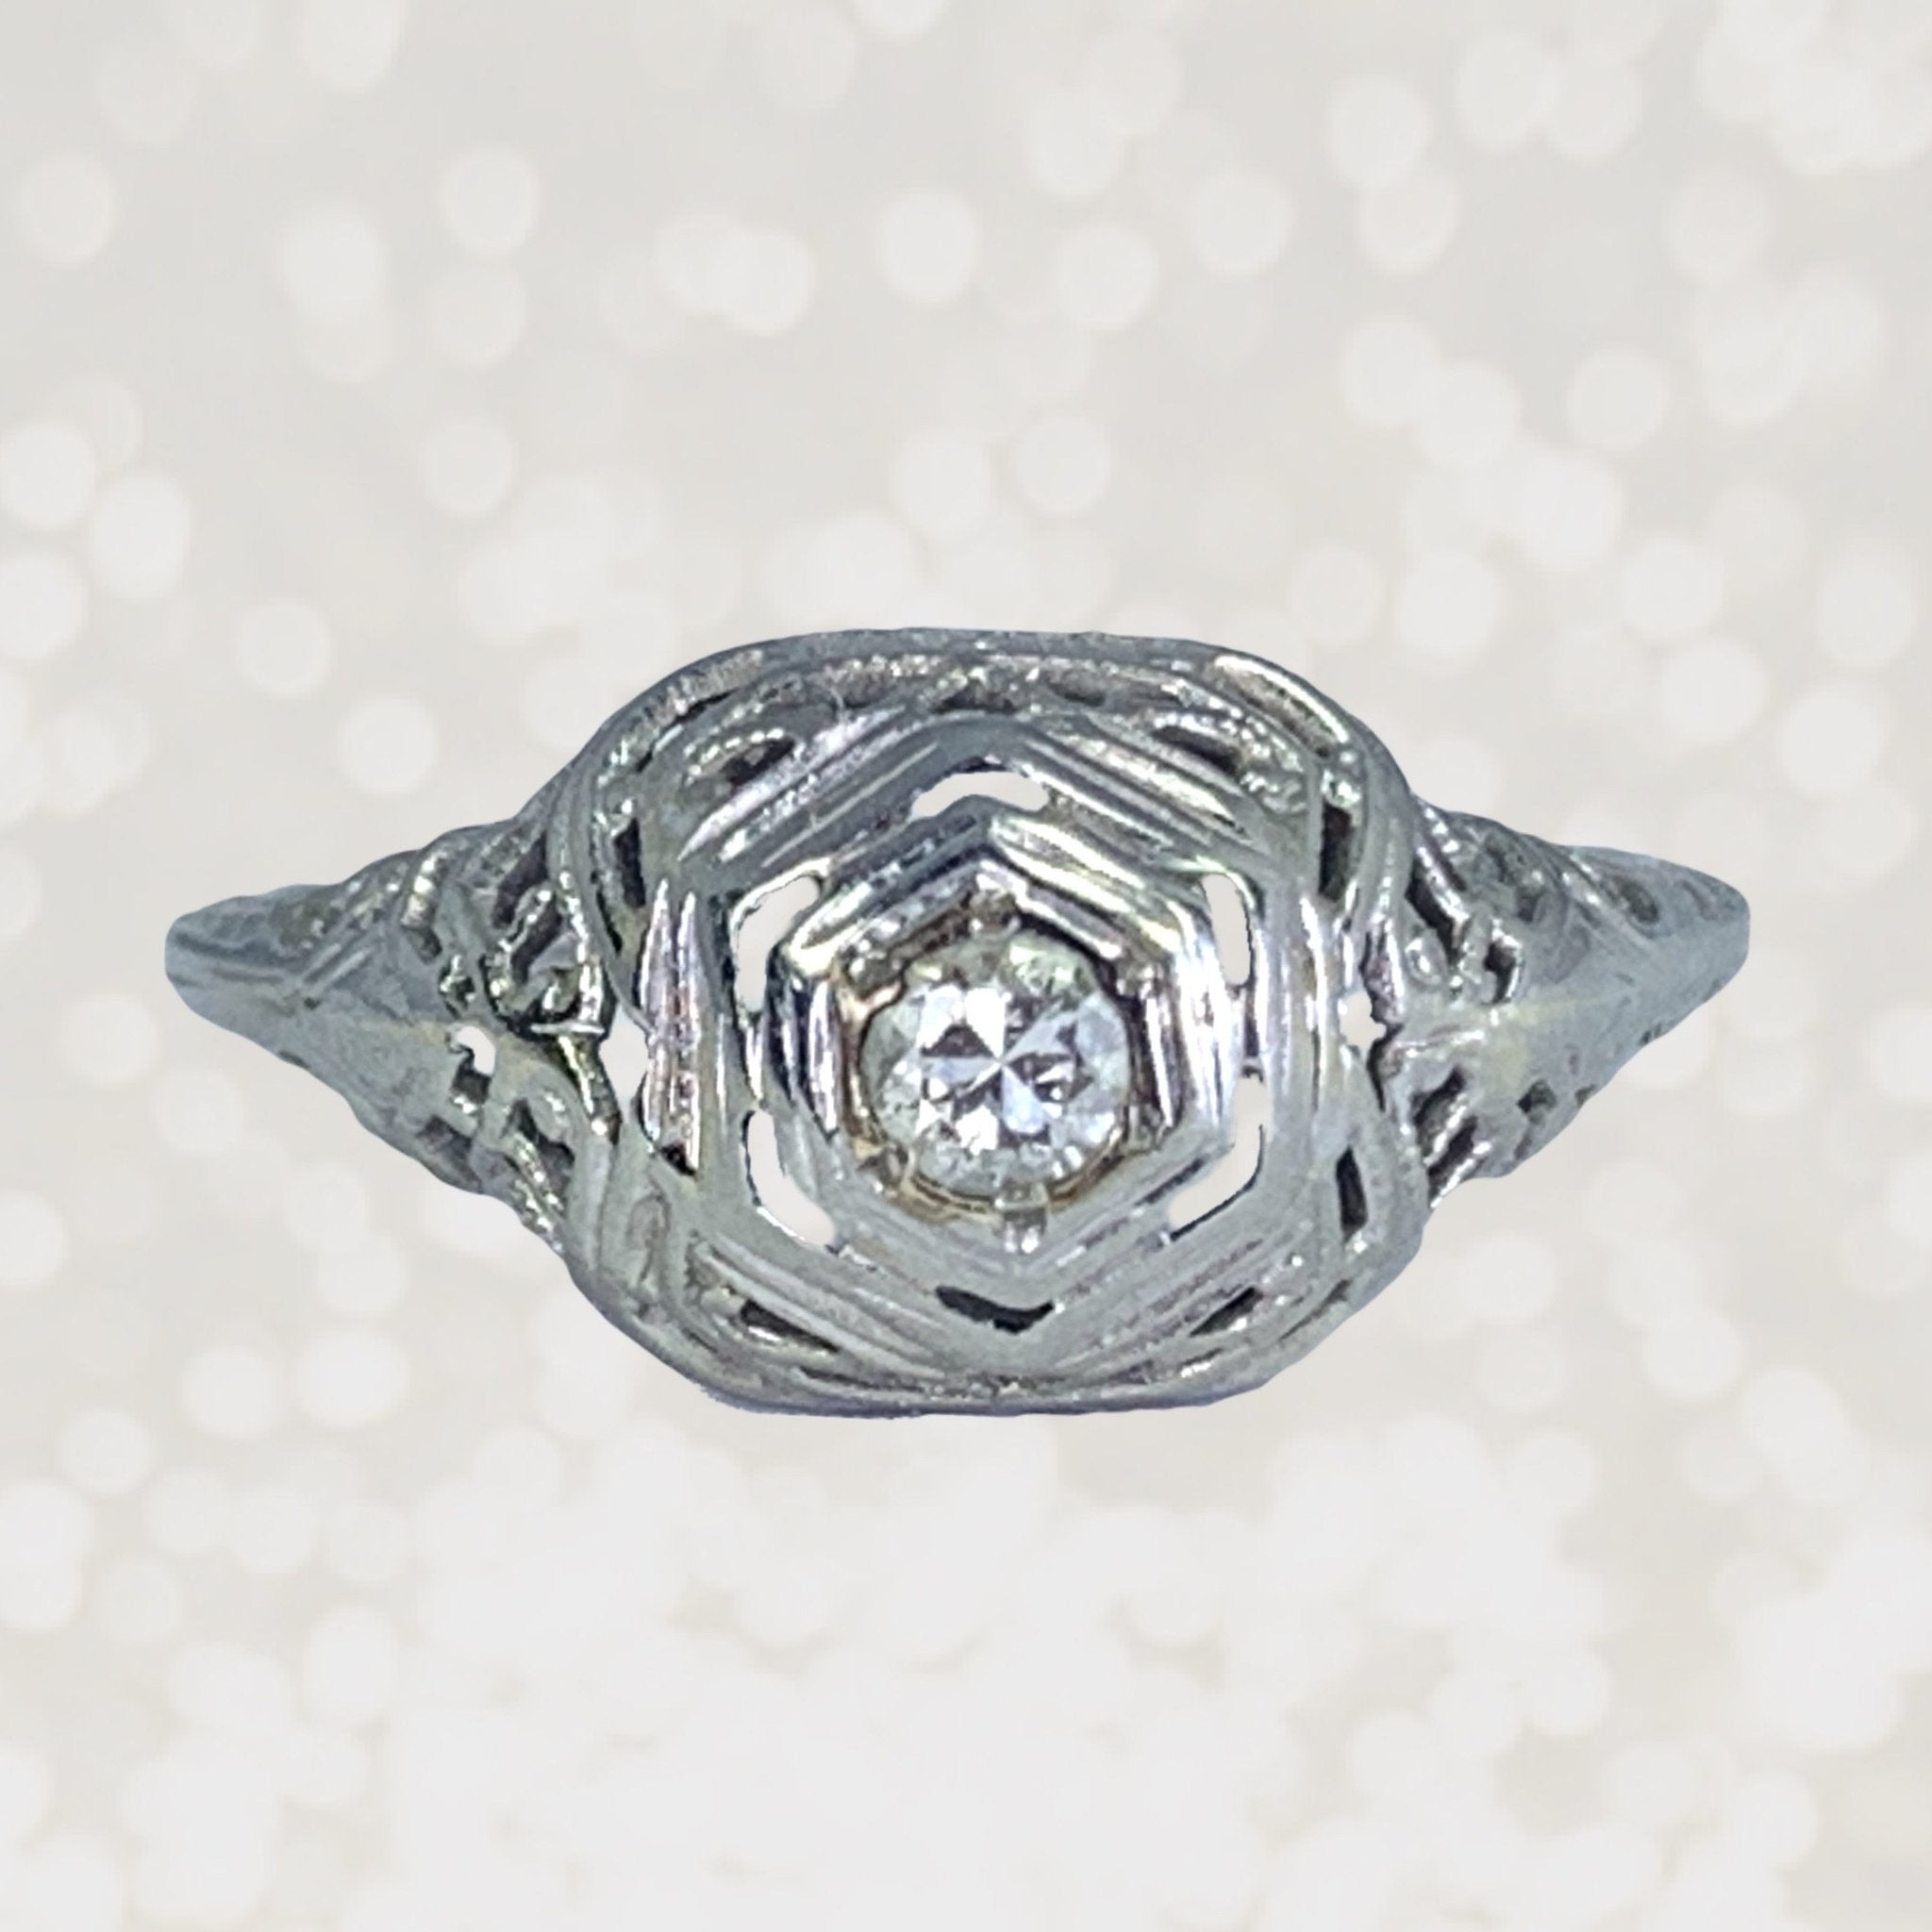 Dainty White Gold Vintage Filigree Engagement Ring Set | Moonkist Designs